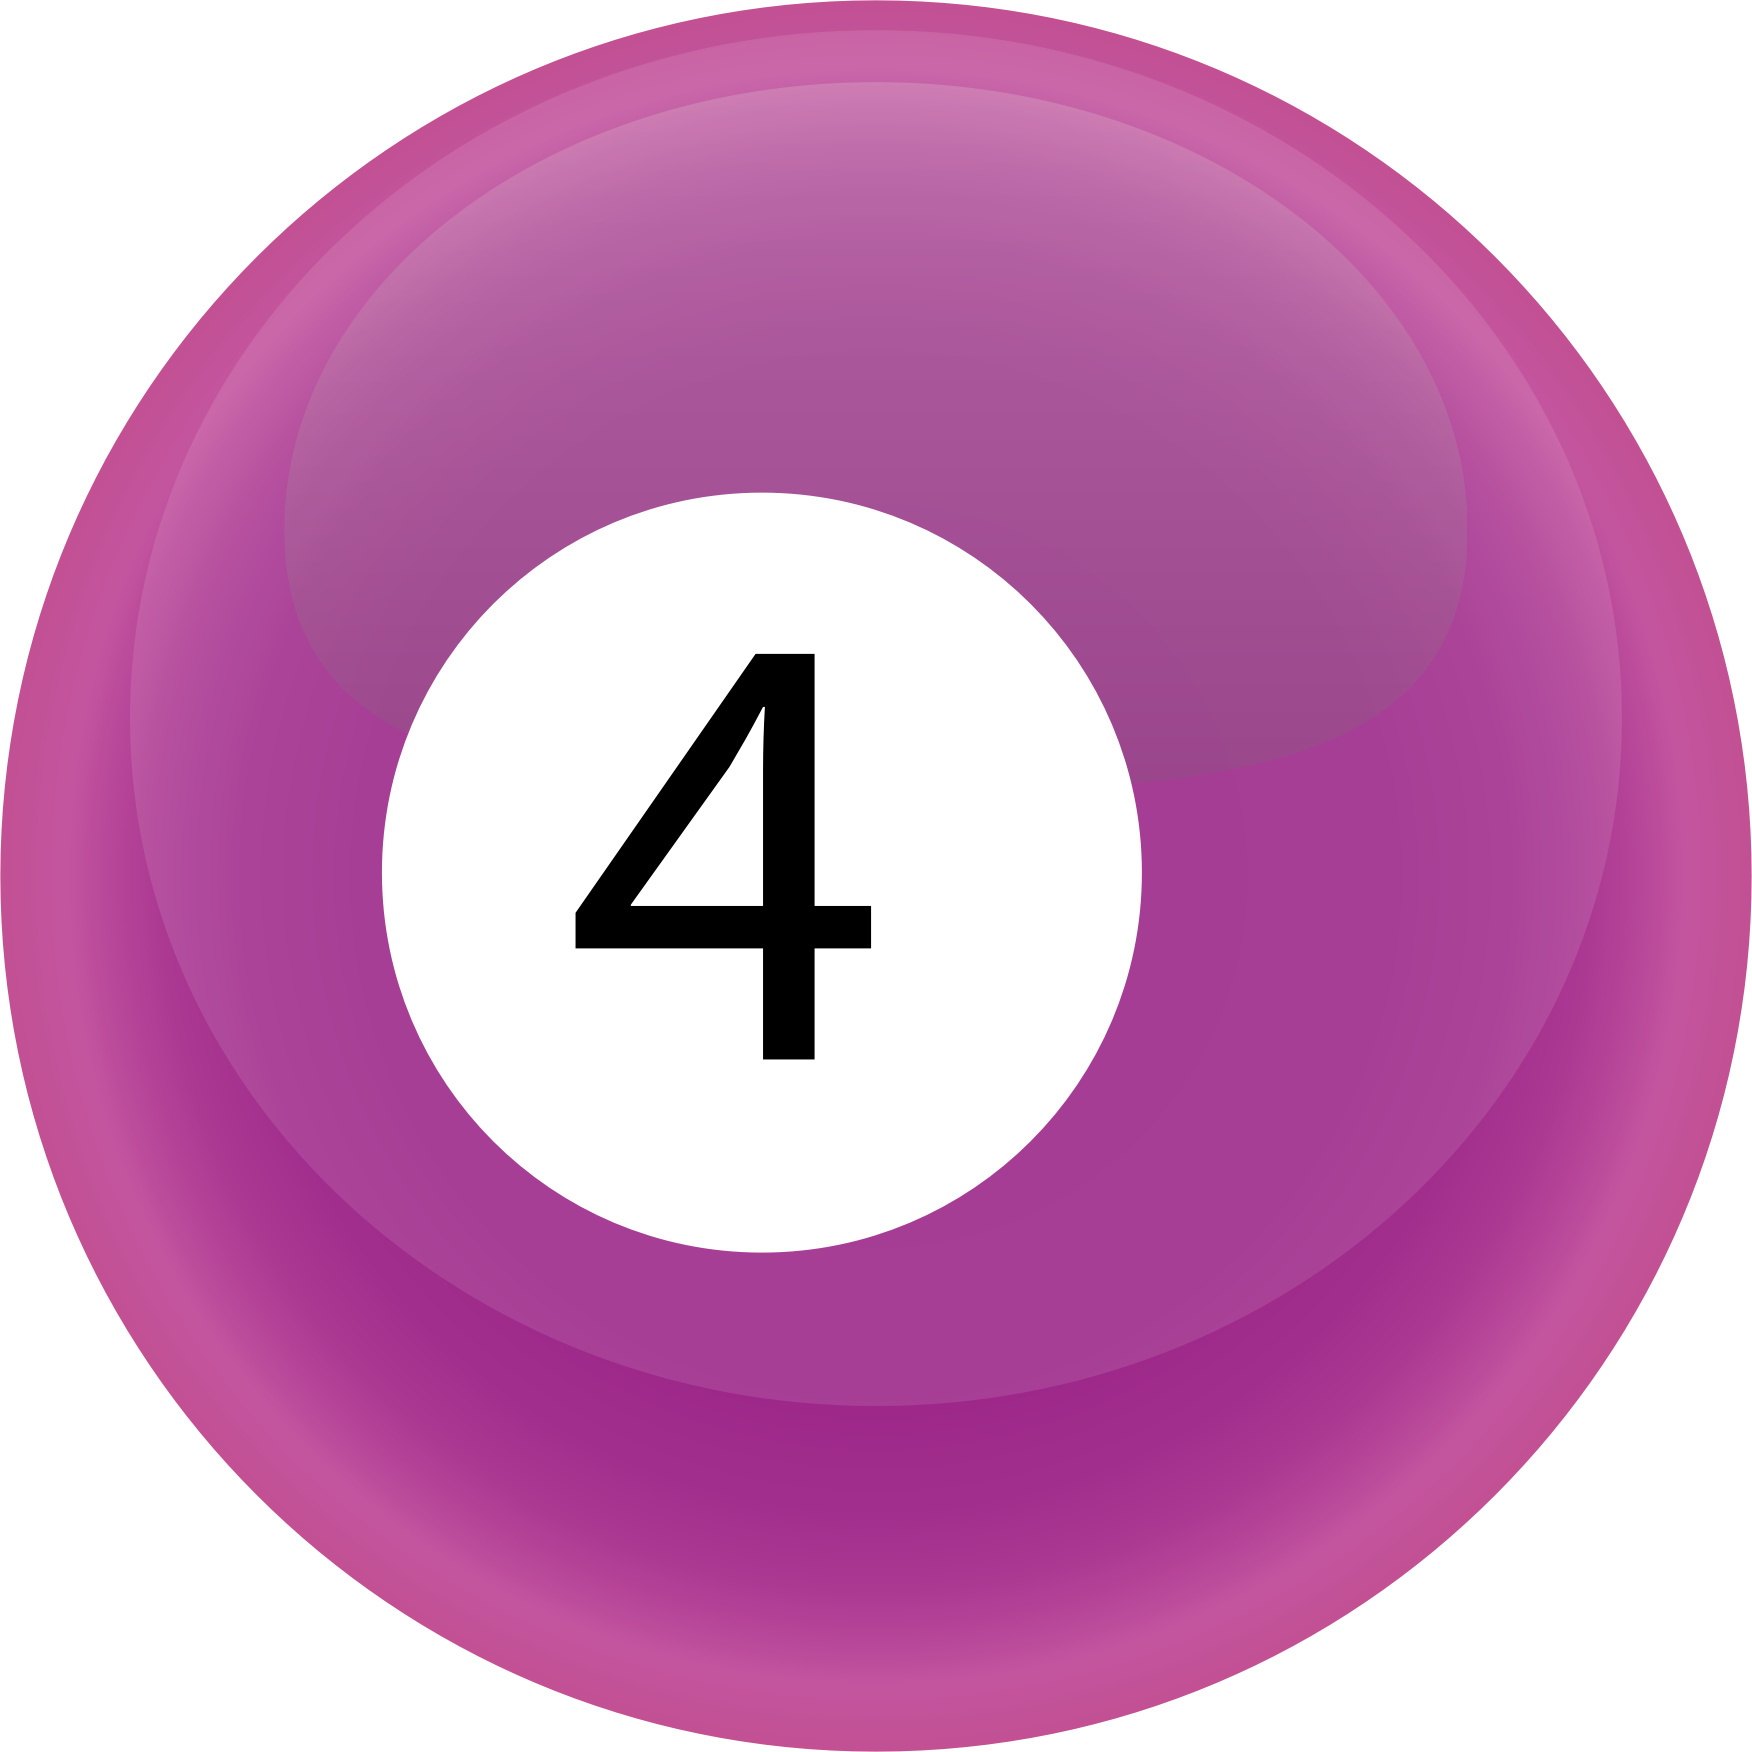 Бильярдный шар 4. Бильярдный шар. Фиолетовый бильярдный шар. Бильярдные шары.